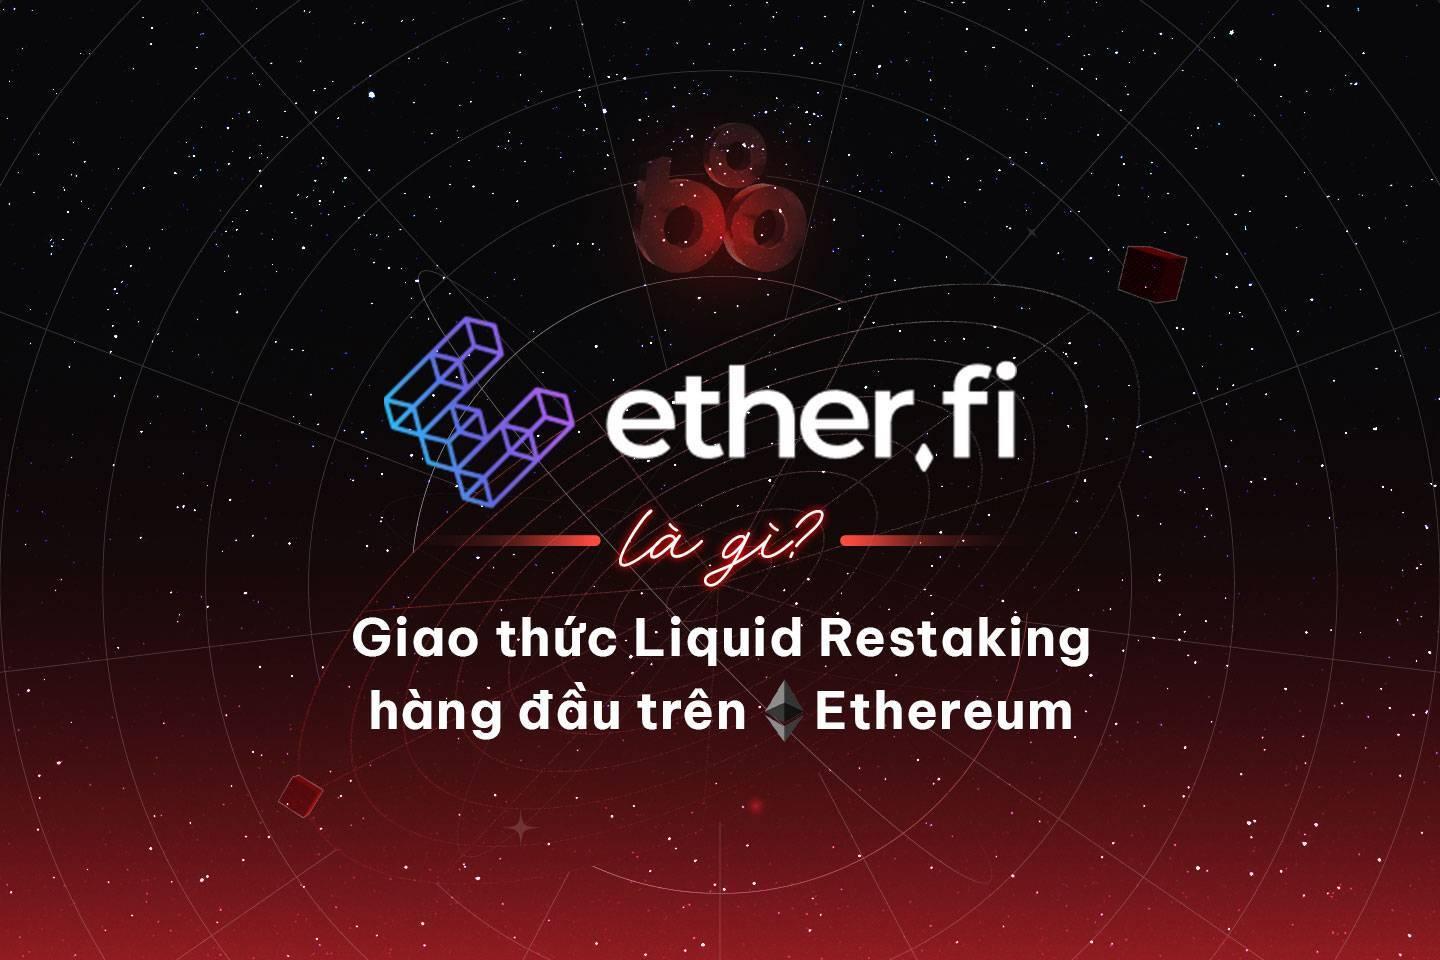 etherfi-la-gi-giao-thuc-liquid-restaking-hang-dau-tren-ethereum